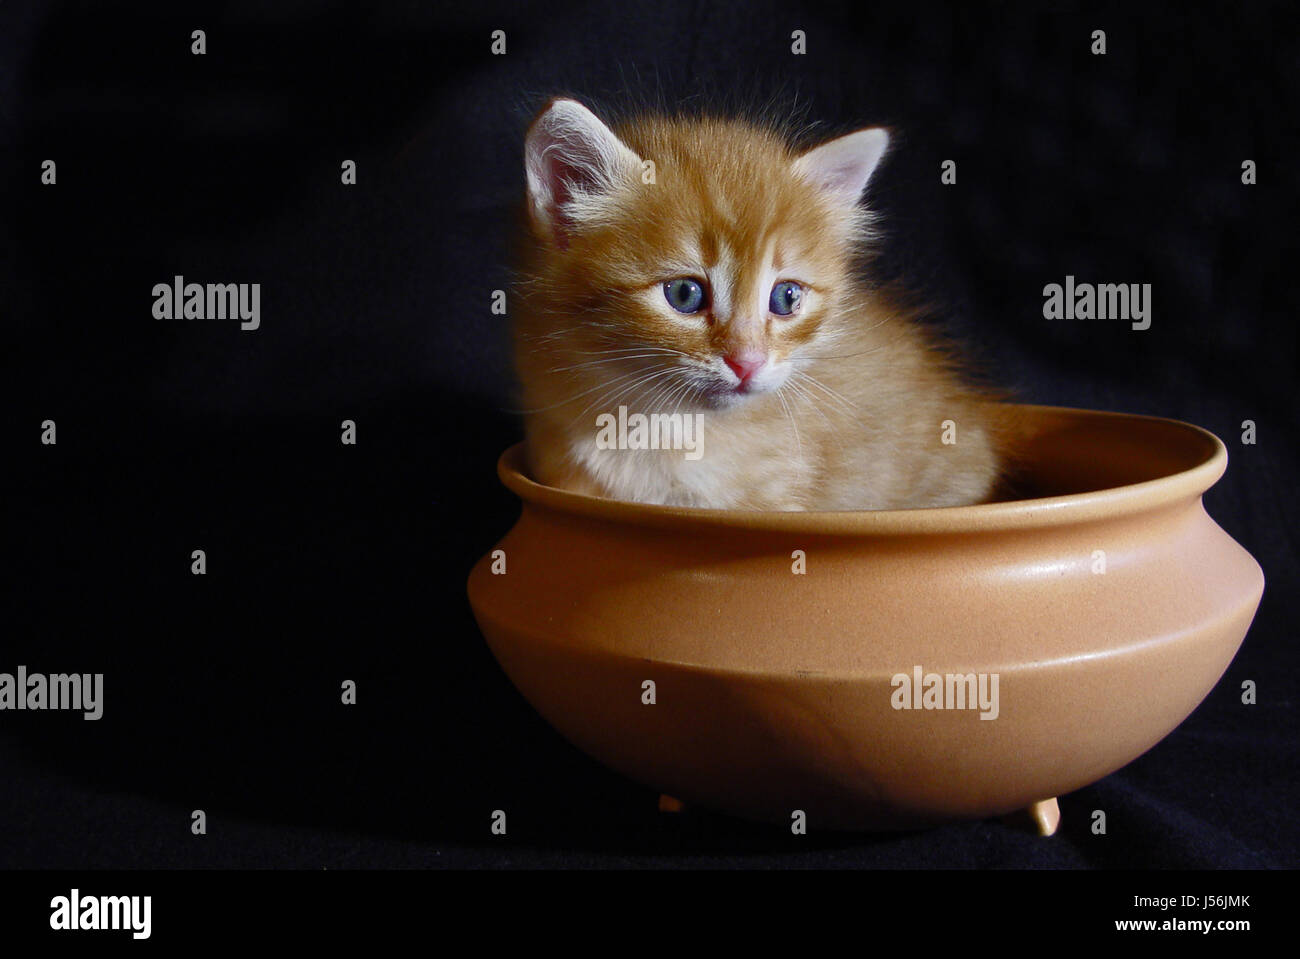 vessel bowl cat baby kitten cement put sitting sit race cute pussycat cat Stock Photo